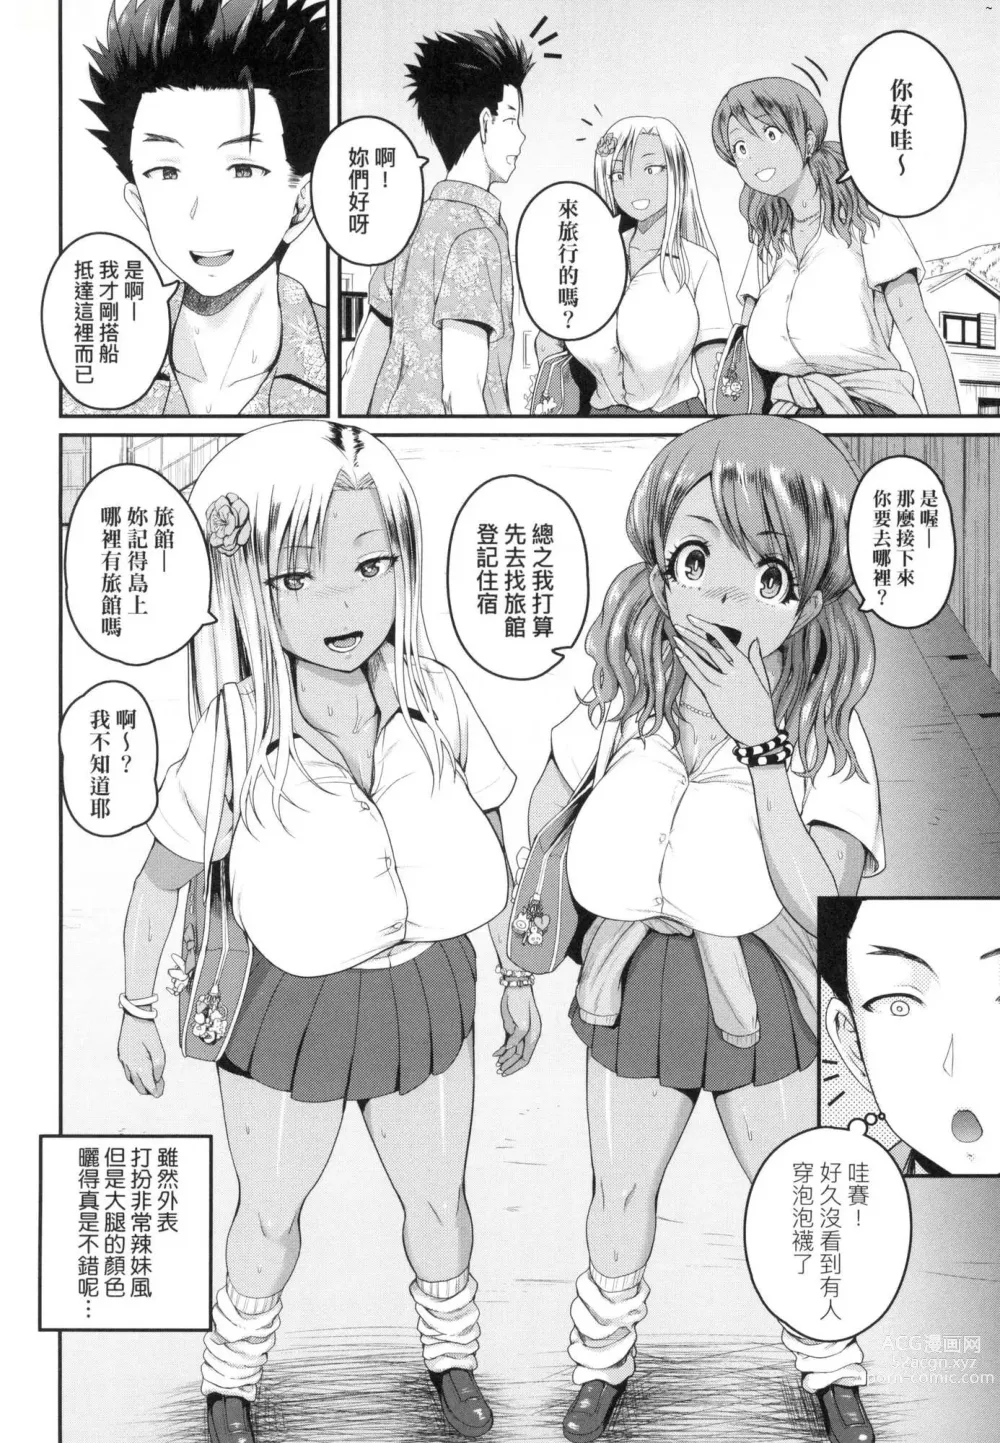 Page 9 of manga 歡迎蒞臨! SEX無限制之島到底是怎樣? (decensored)